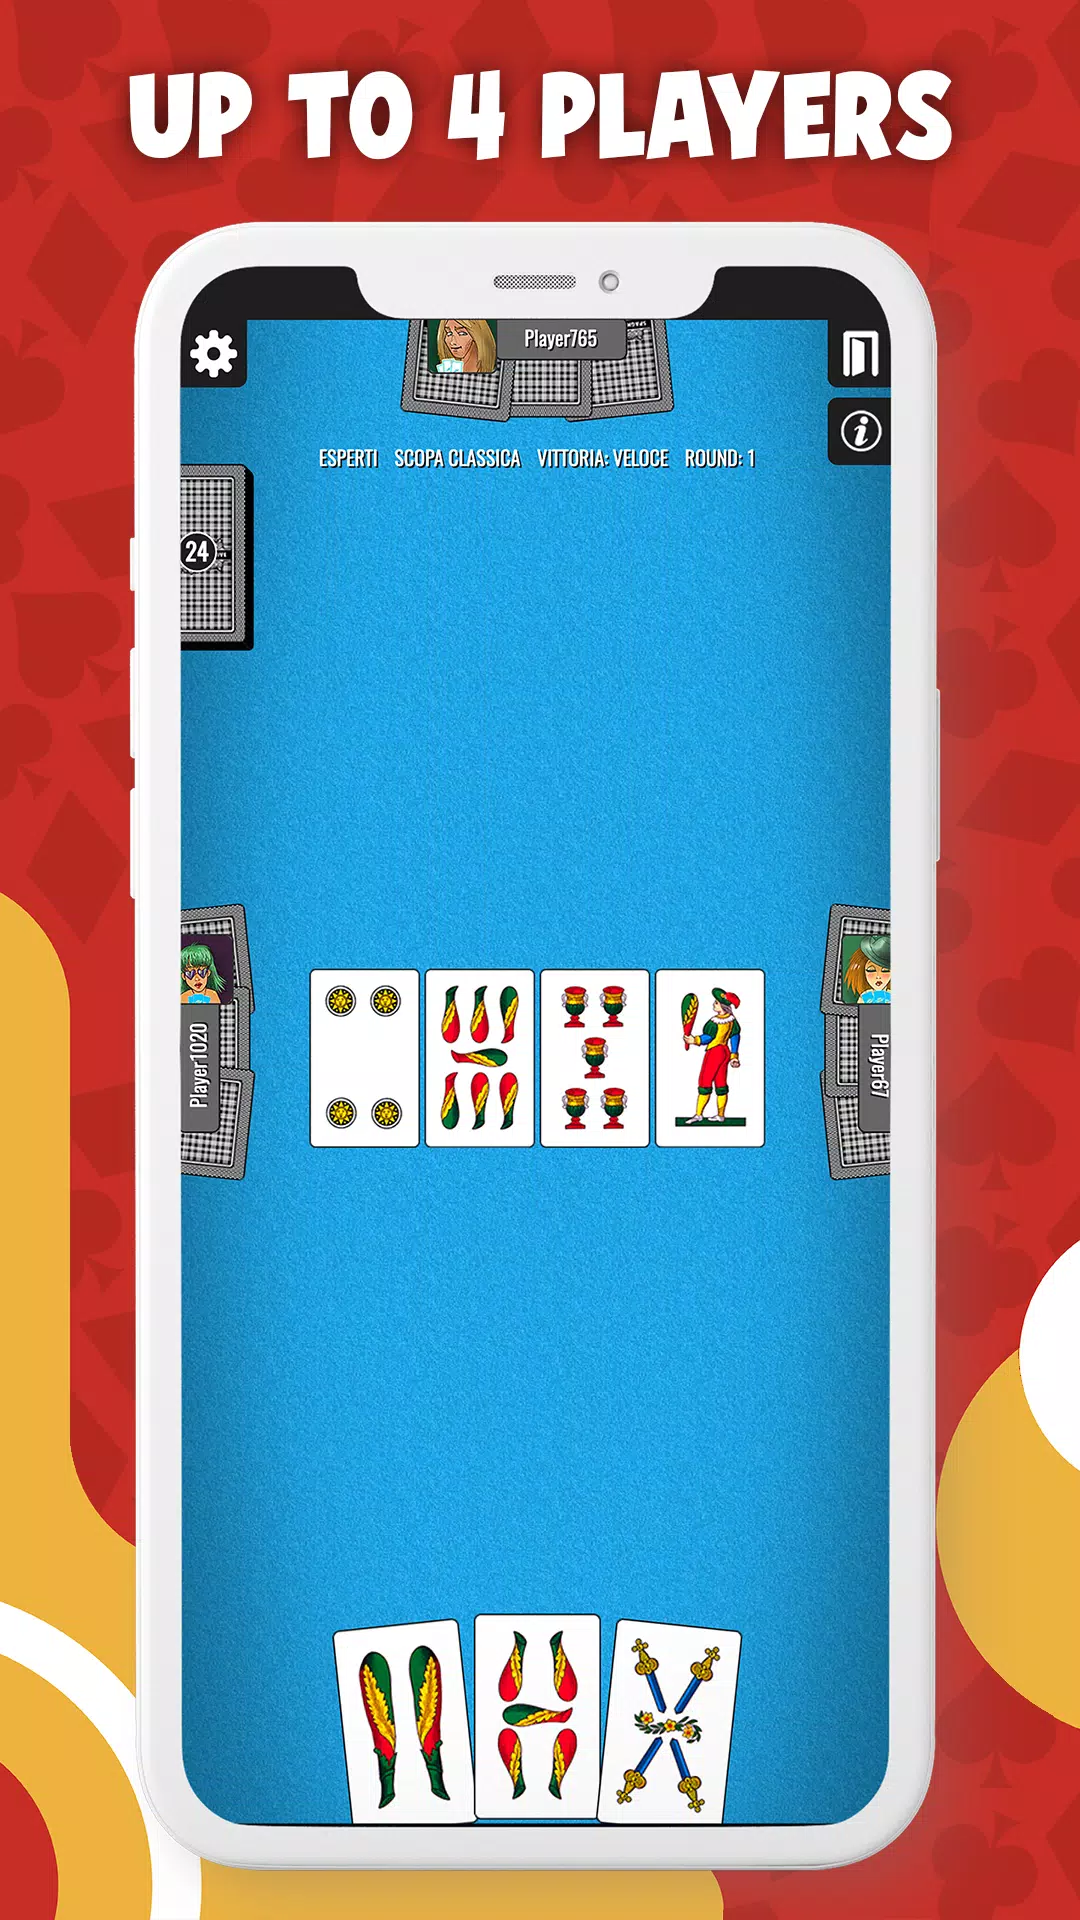 Tressette - Classic Card Games na App Store